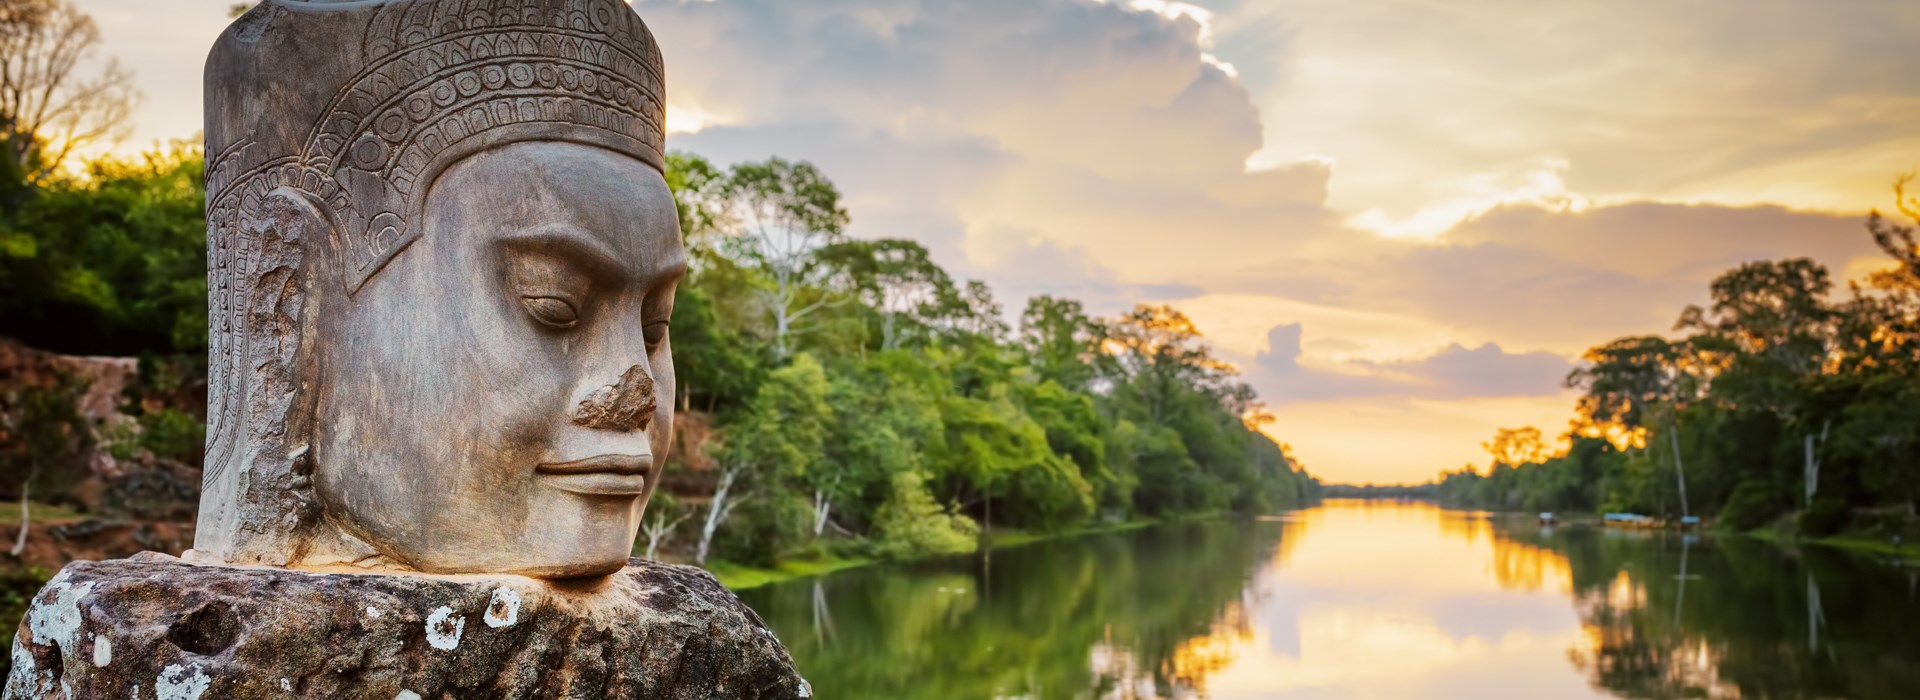 Visiter La cité archéologique d'Angkor Thom (Cambodge) - Vietnam-Cambodge